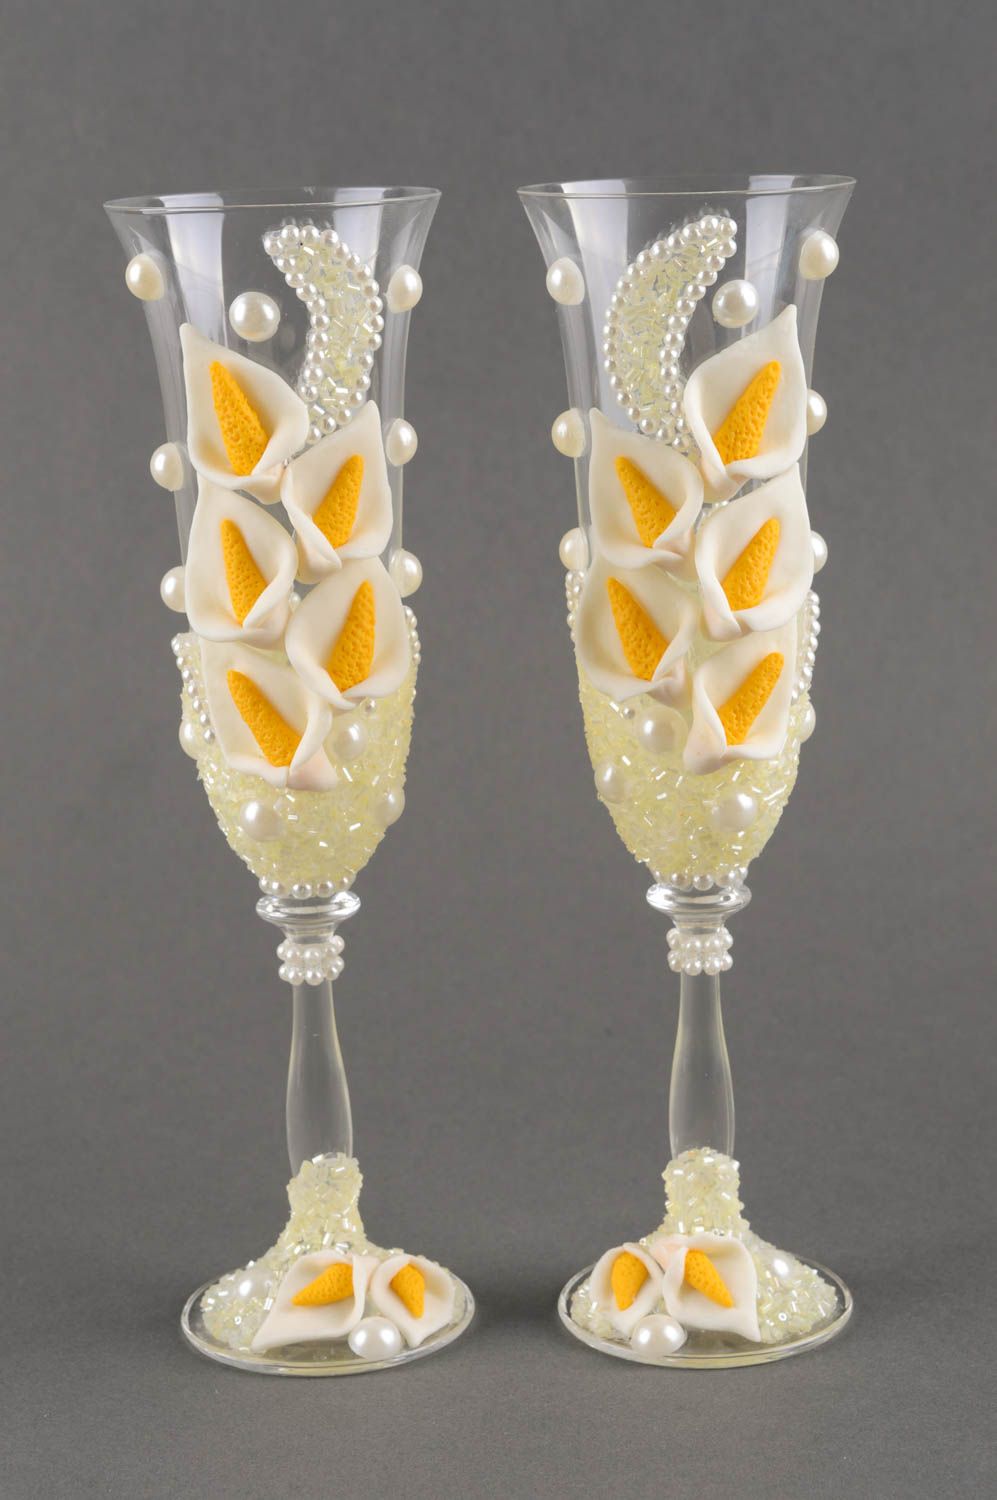 Best wine glasses handmade champagne glasses table decorating ideas wedding gift photo 2